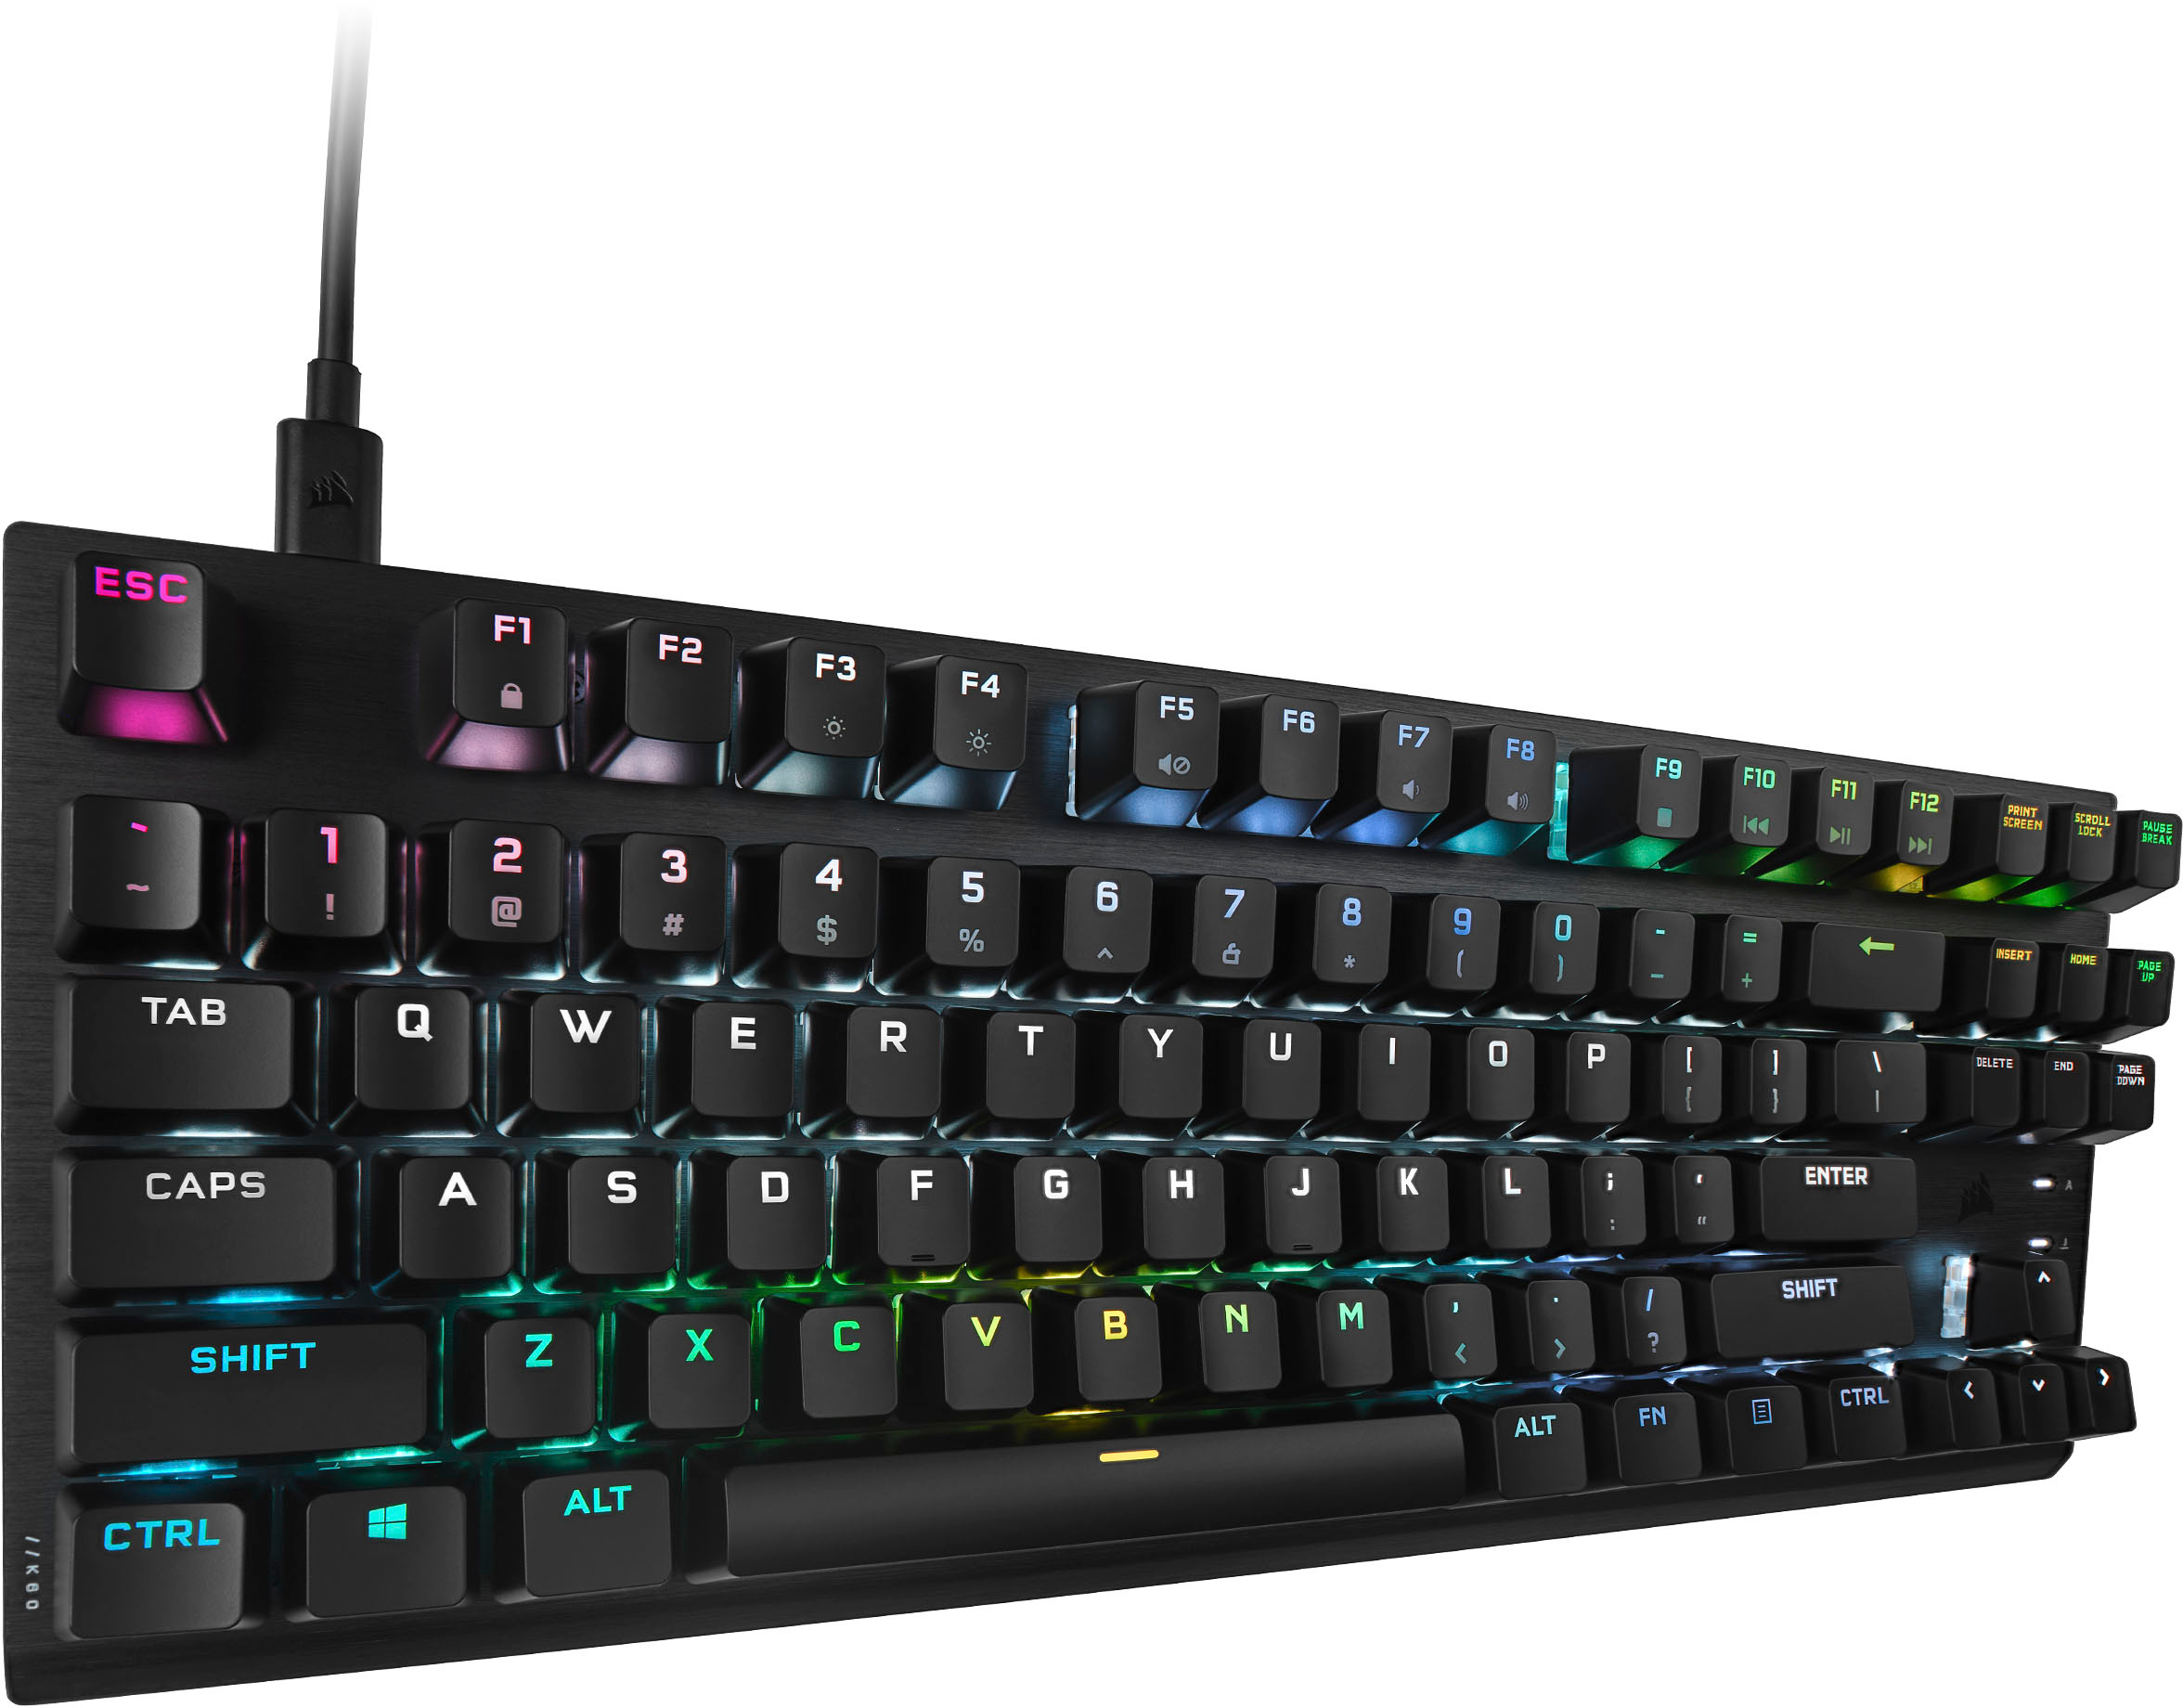 CORSAIR K100 RGB optical-mechanical gaming keyboard has a durable